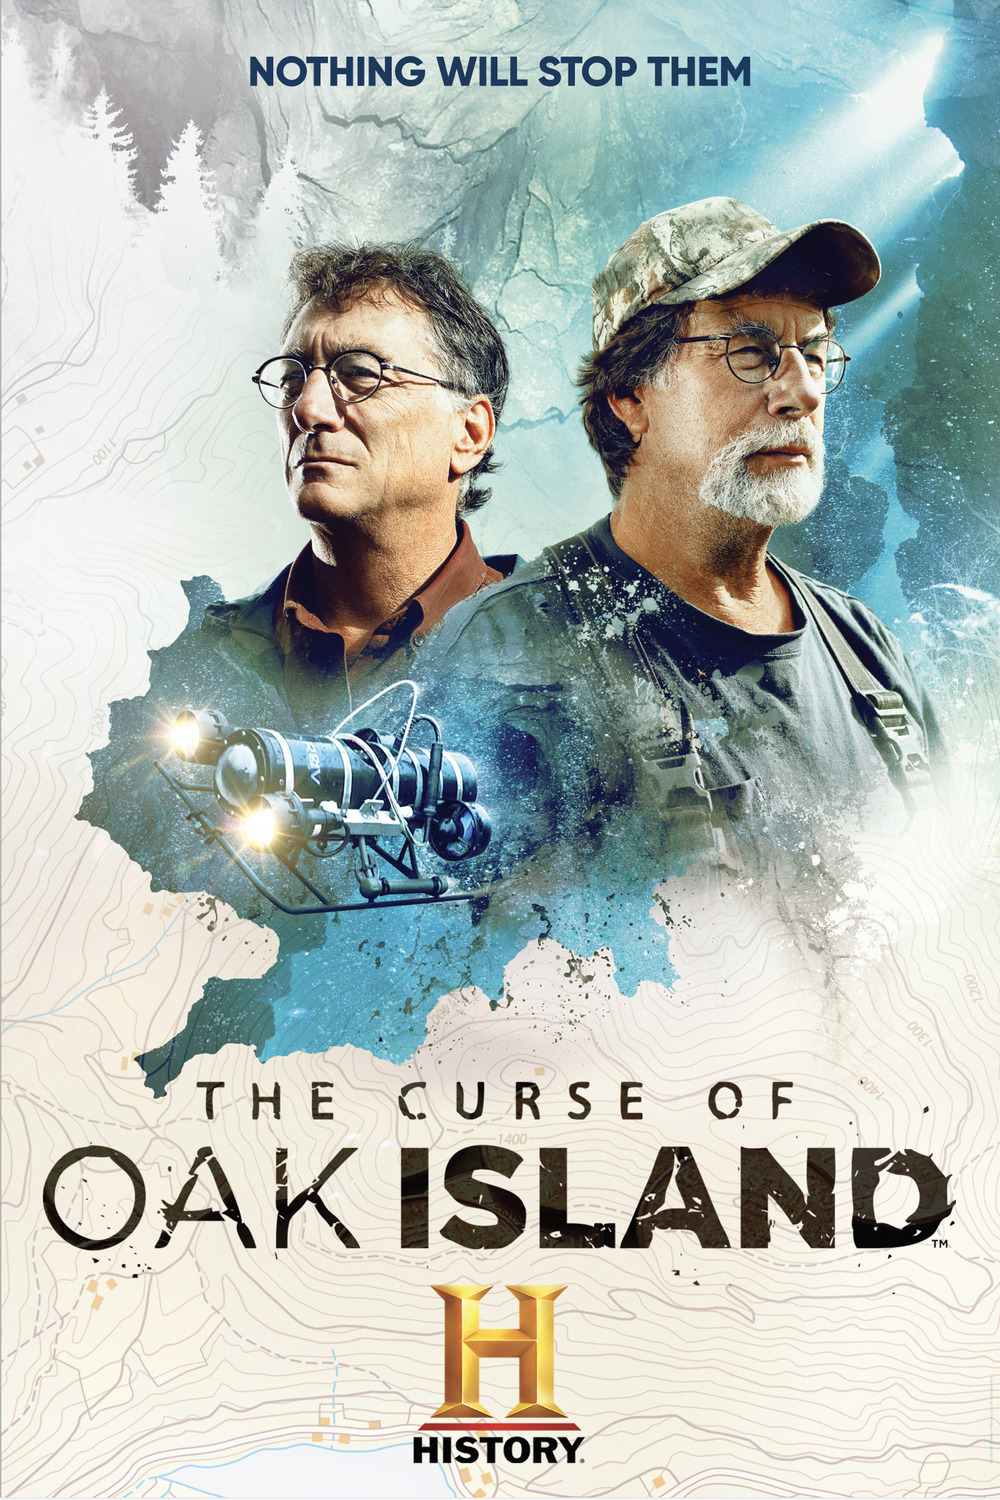 The Curse Of Oak Island S11E10 [720p] (x265) D3efb90028ca8a10b698e0058e13cef5